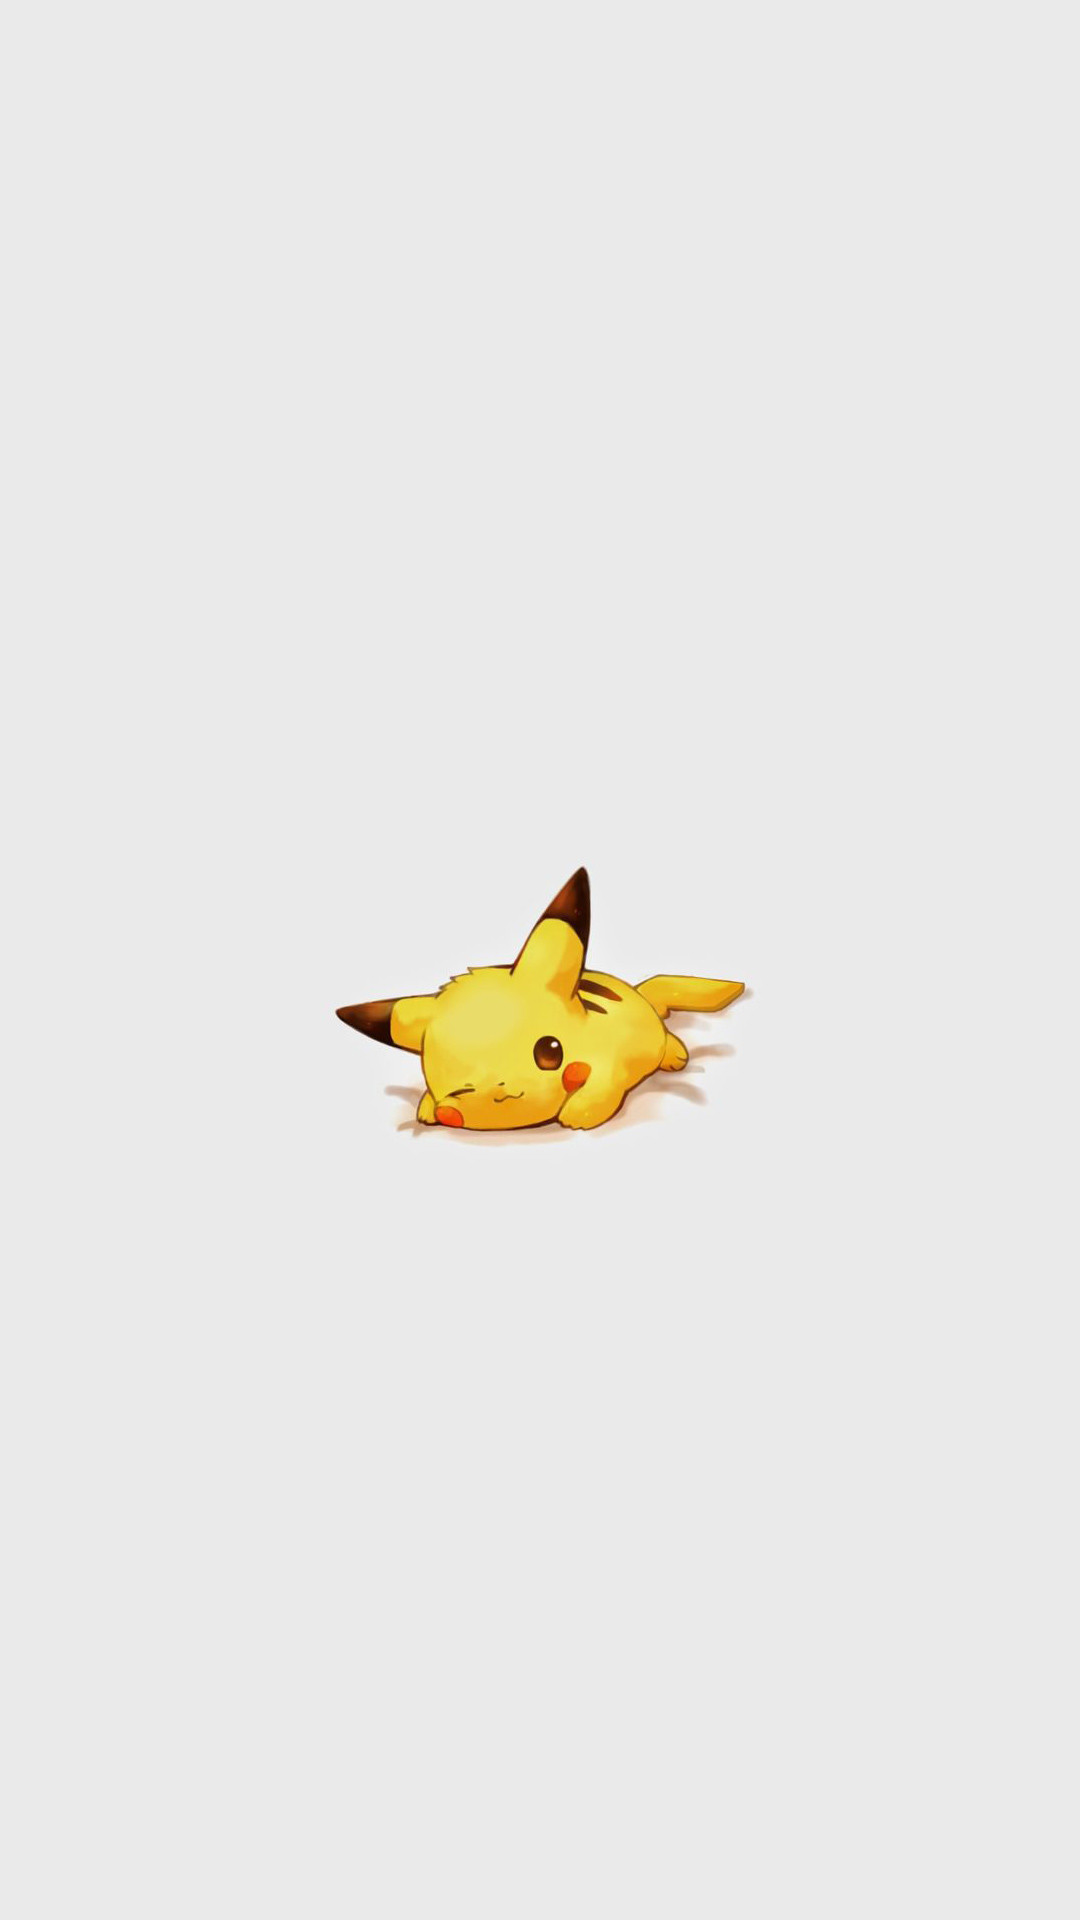 1080x1920 Cute Pikachu Pokemon Character iPhone 6+ HD Wallpaper -  http://freebestpicture.